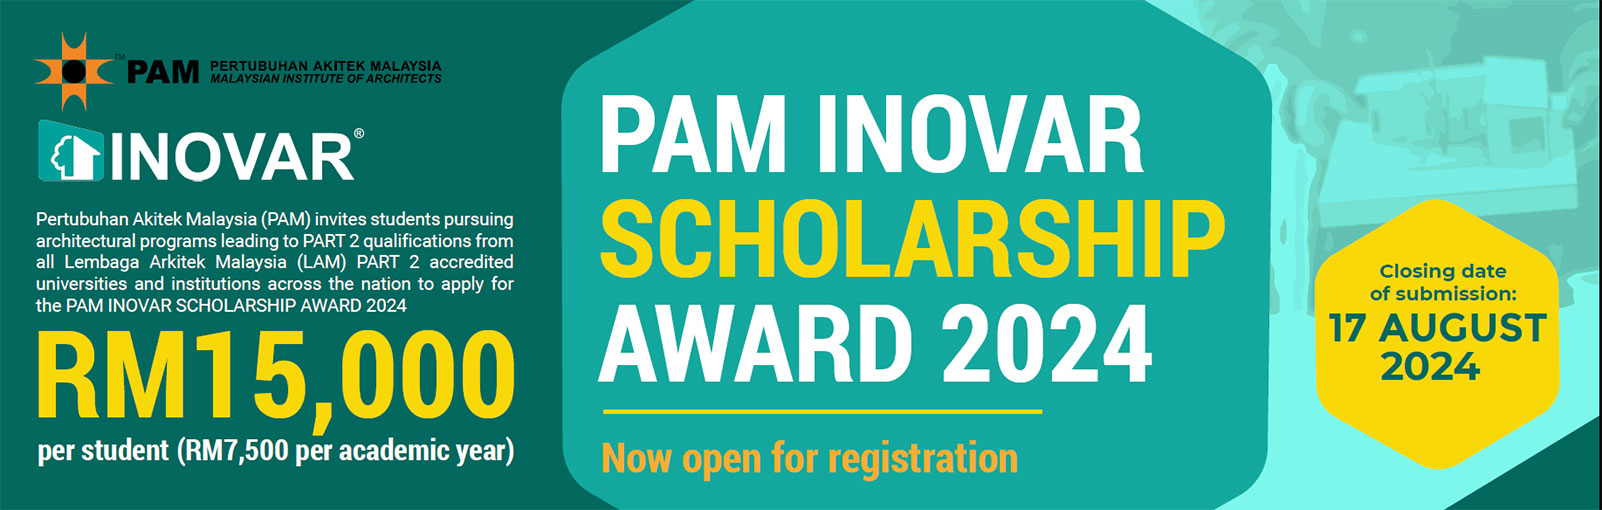 PAM Inovar Scholarship Award 2024